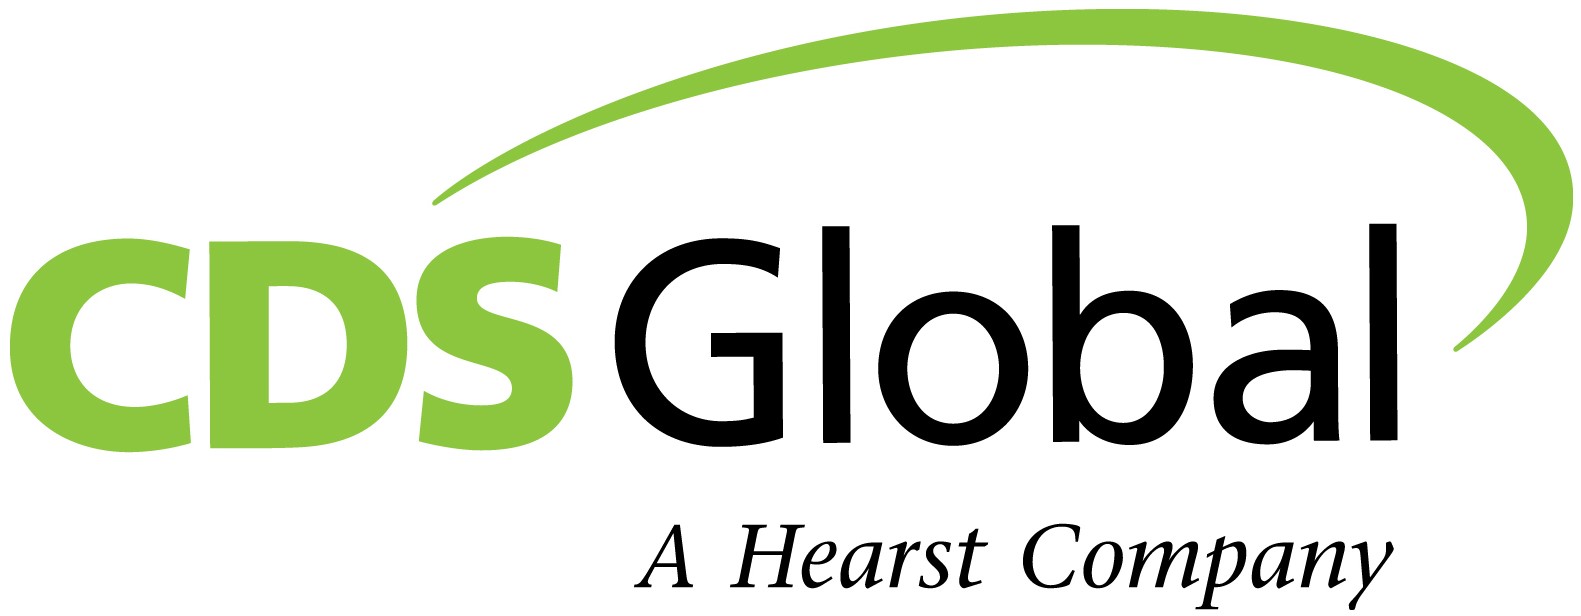 Sponsor: CDS Global Inc